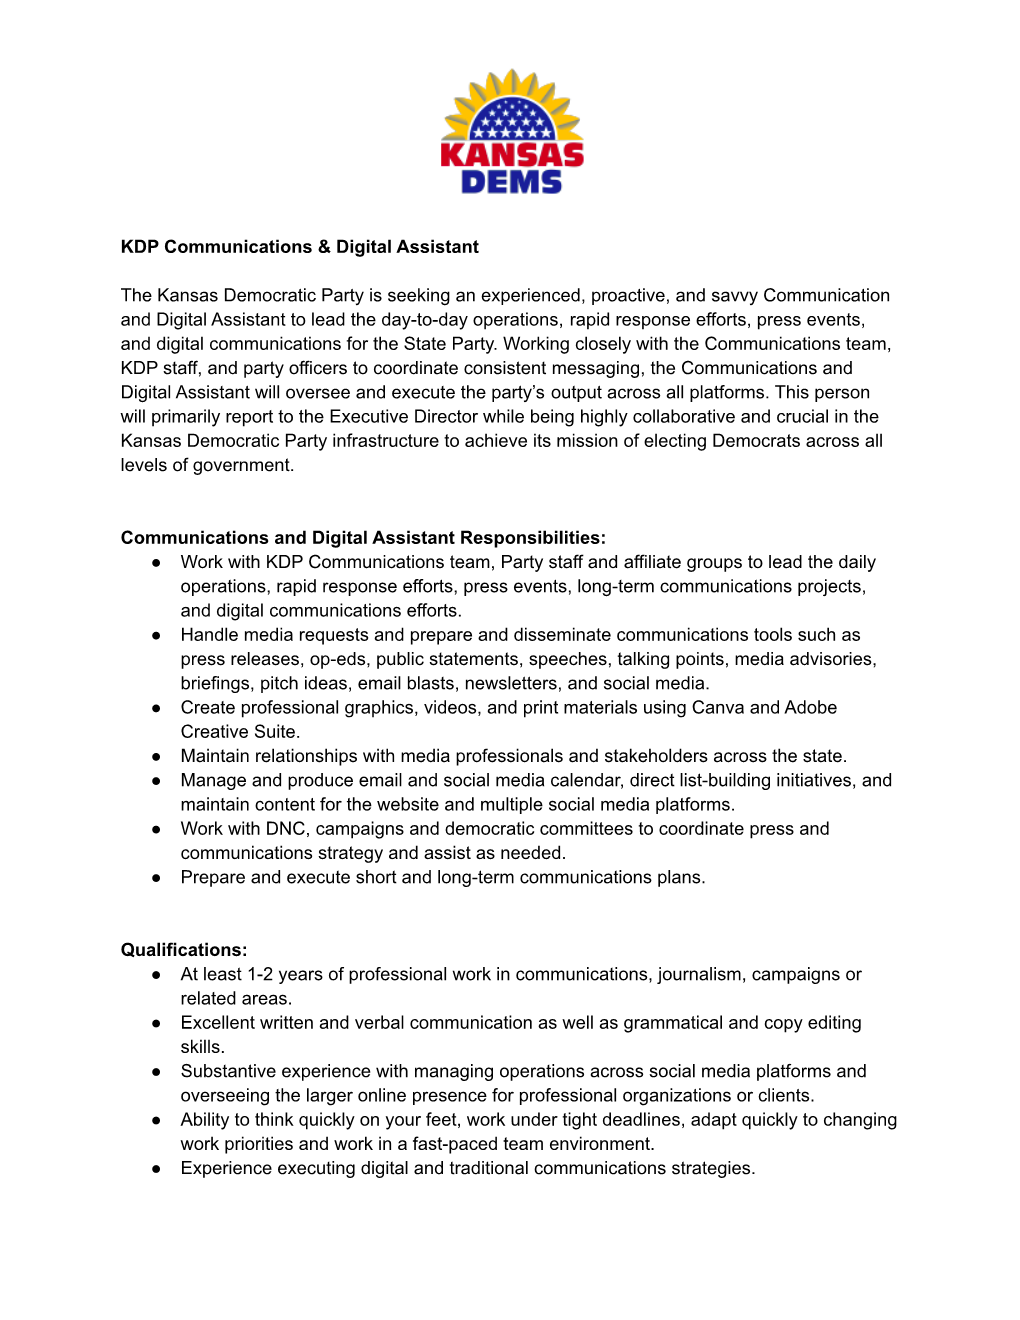 KDP Communications Assistant Job Description